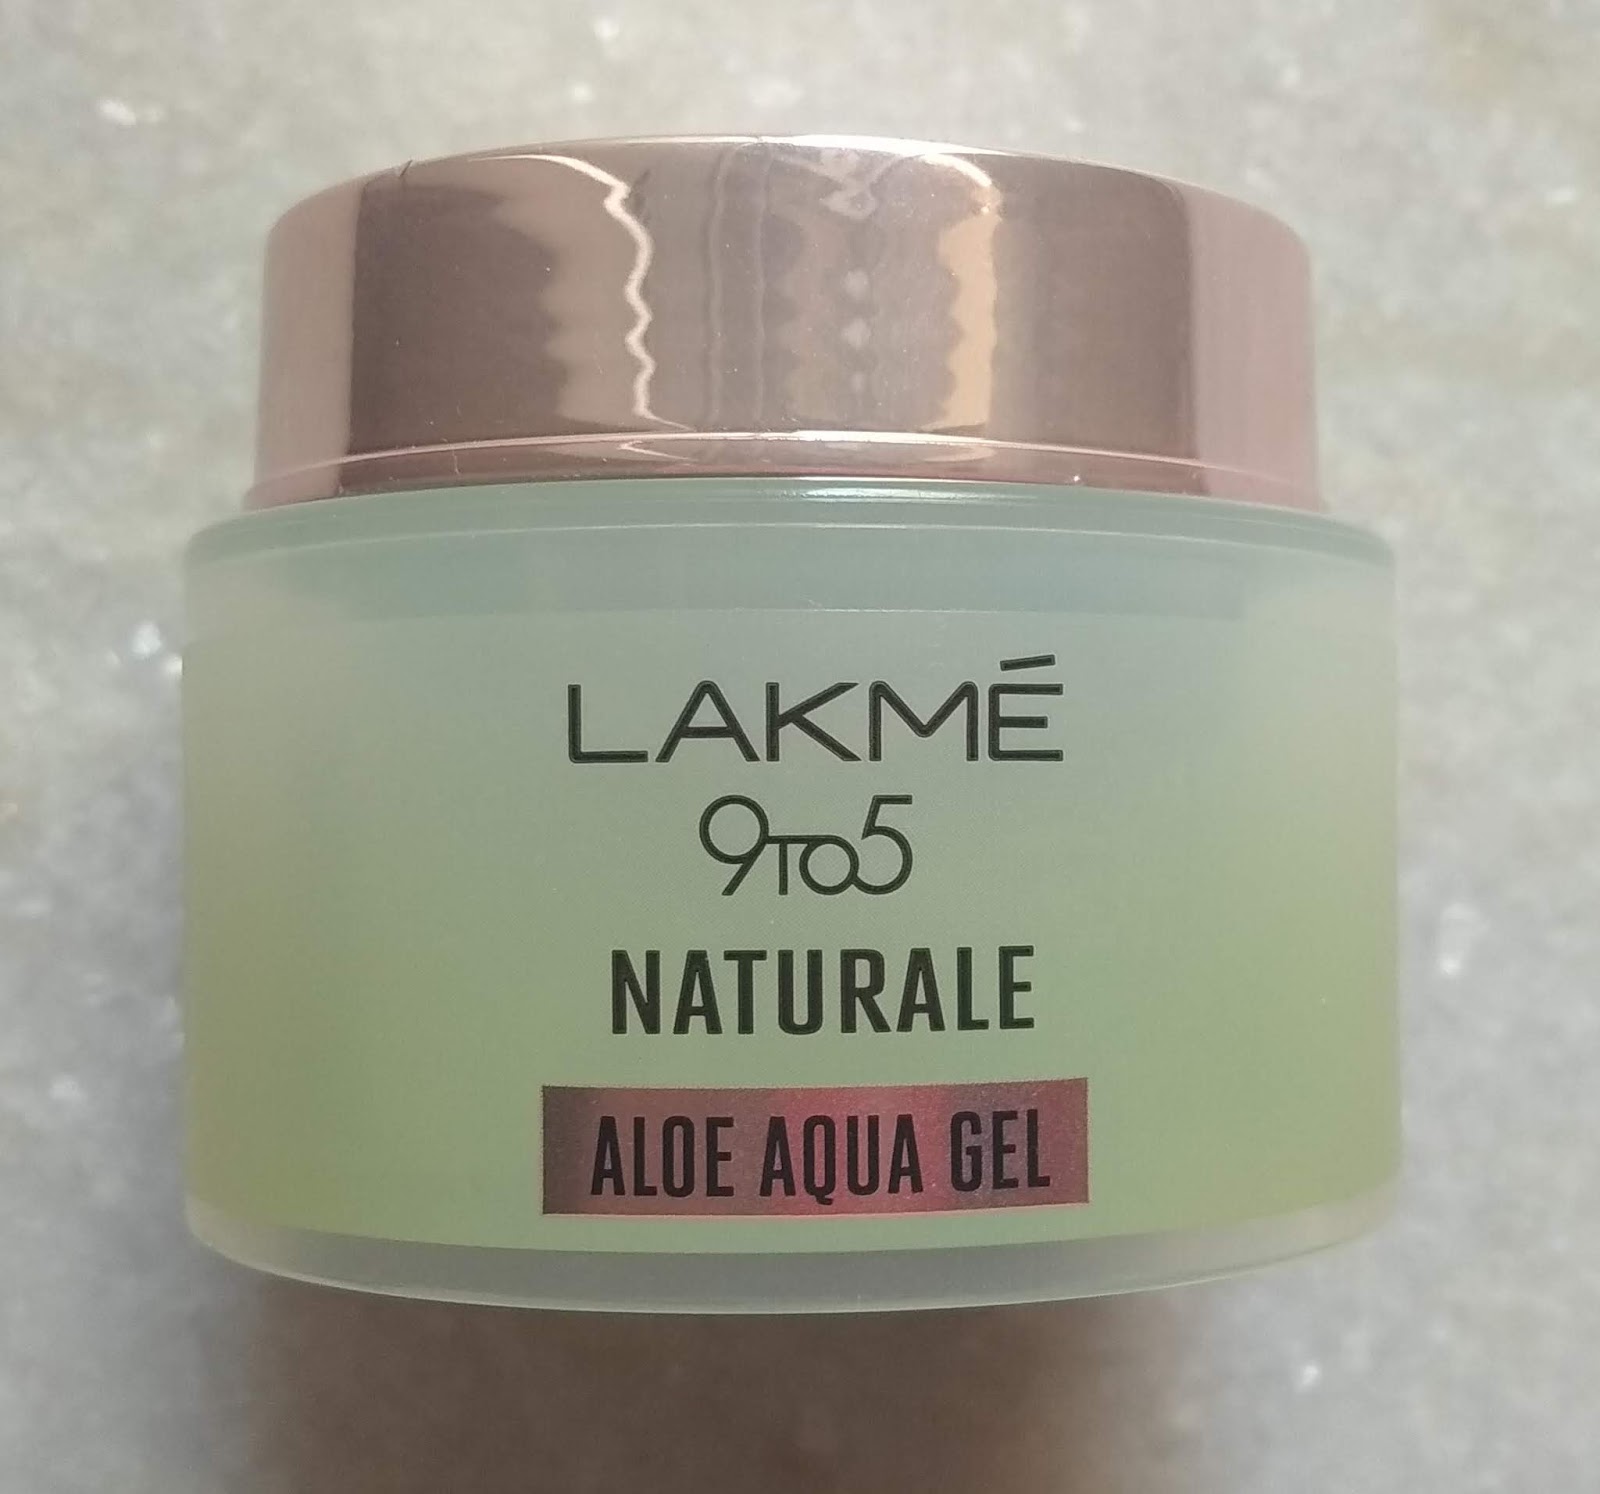 Lakme 9 To 5 Naturale Aloe Aqua Gel Review Peachypinkpretty